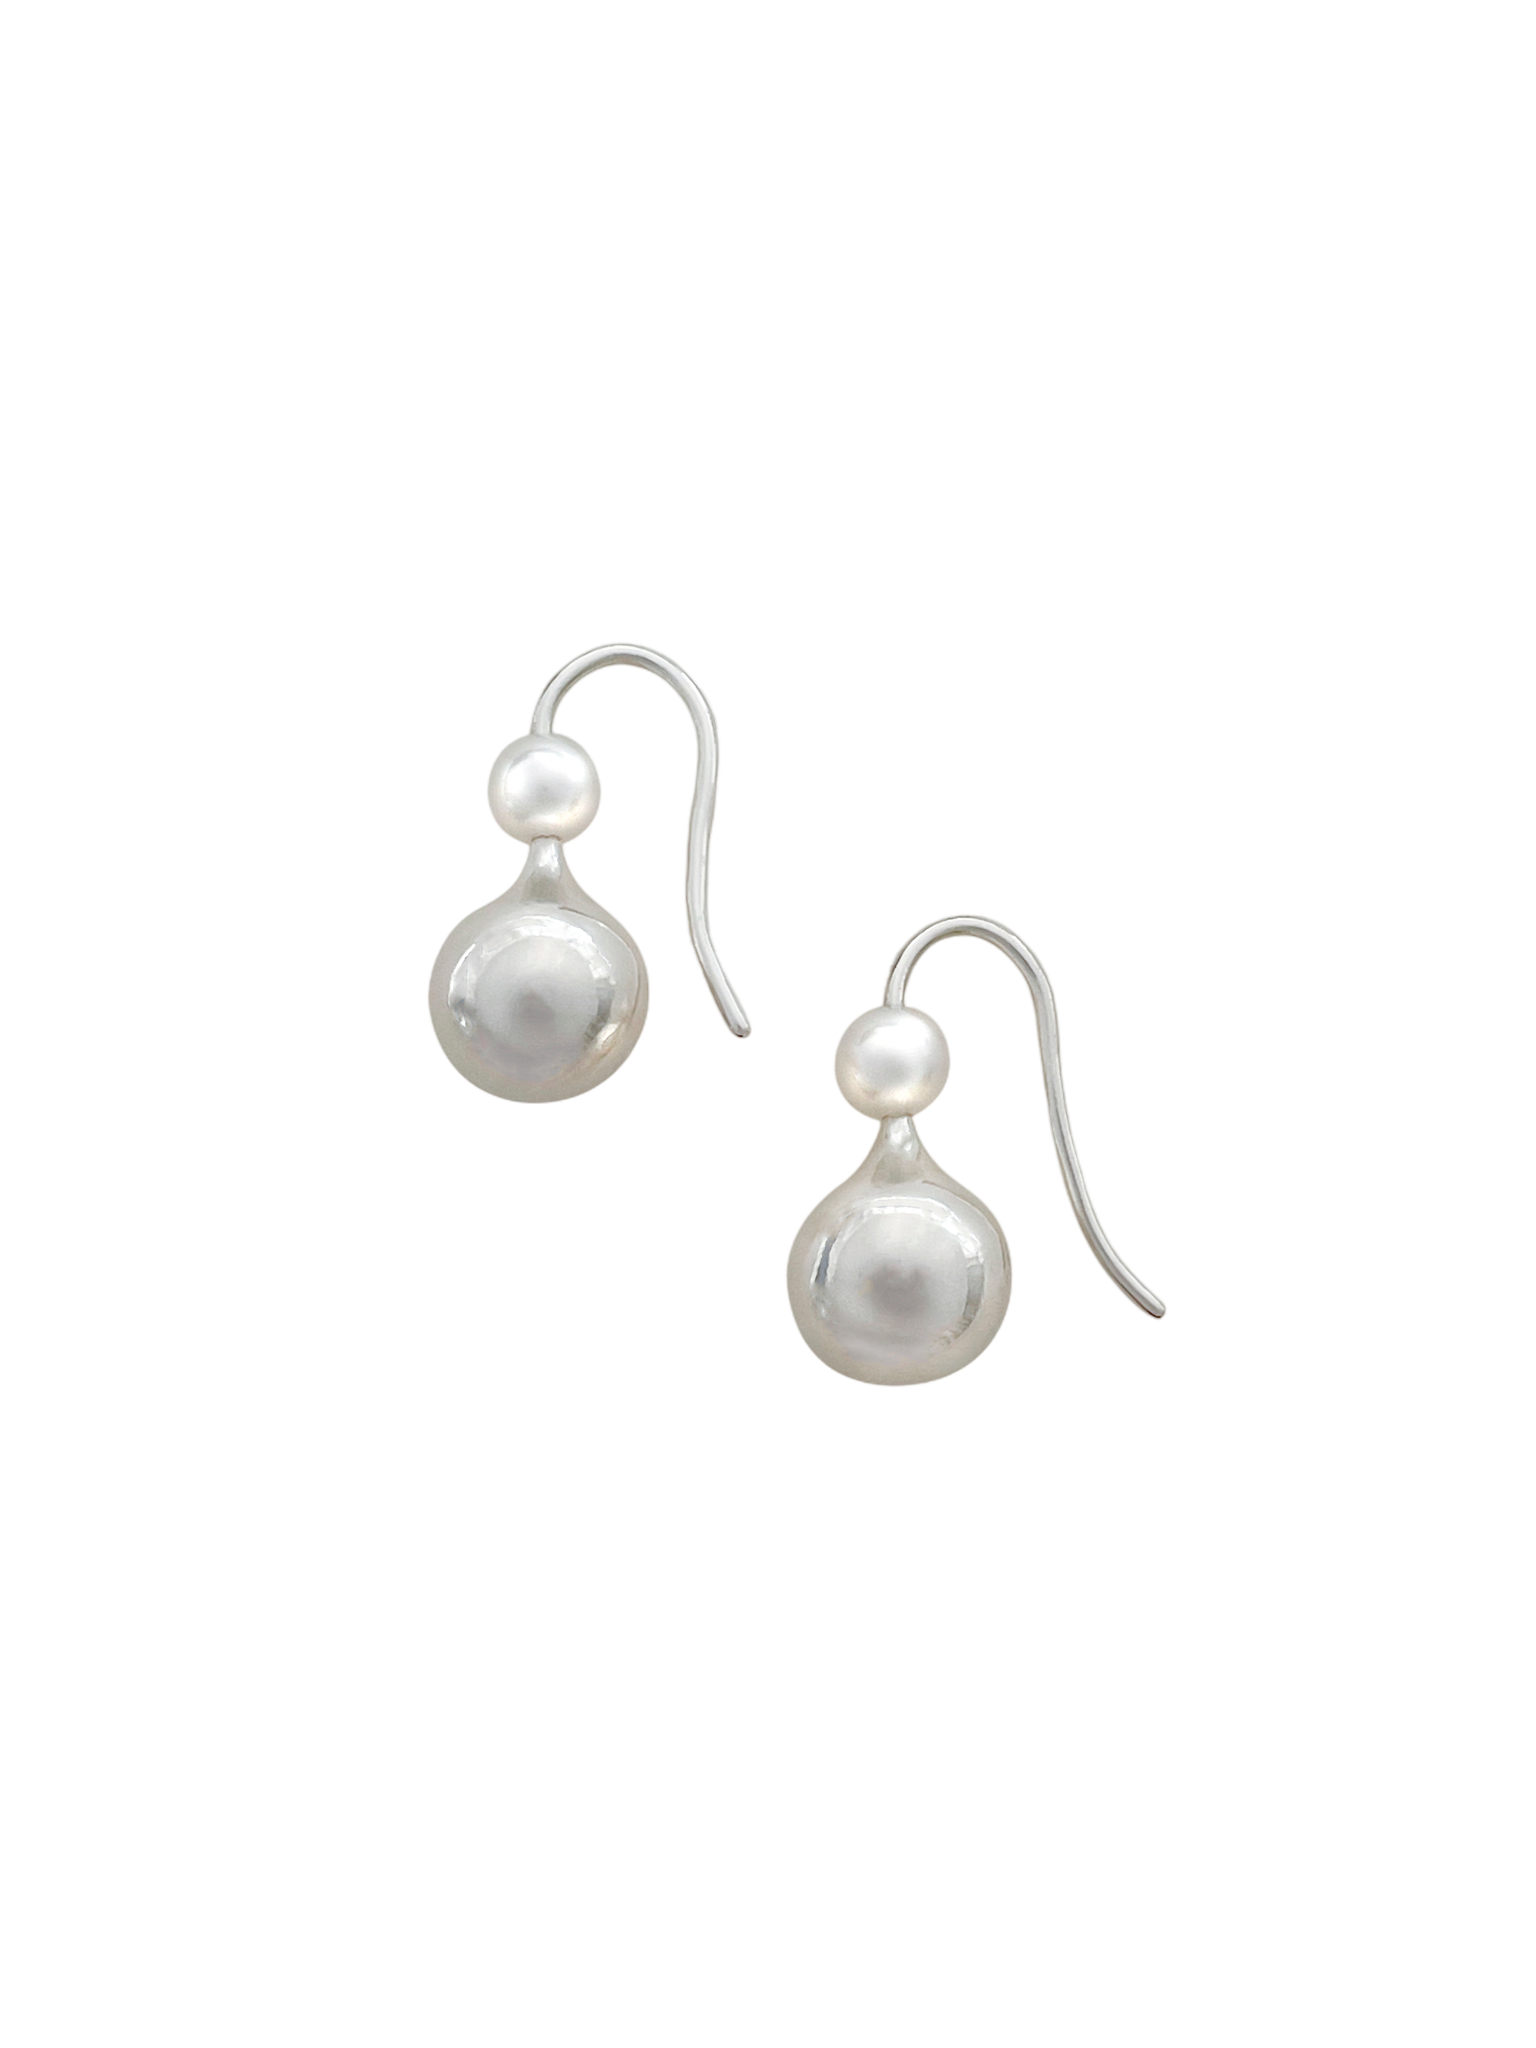 Sintra earrings in silver with freshwater pearl